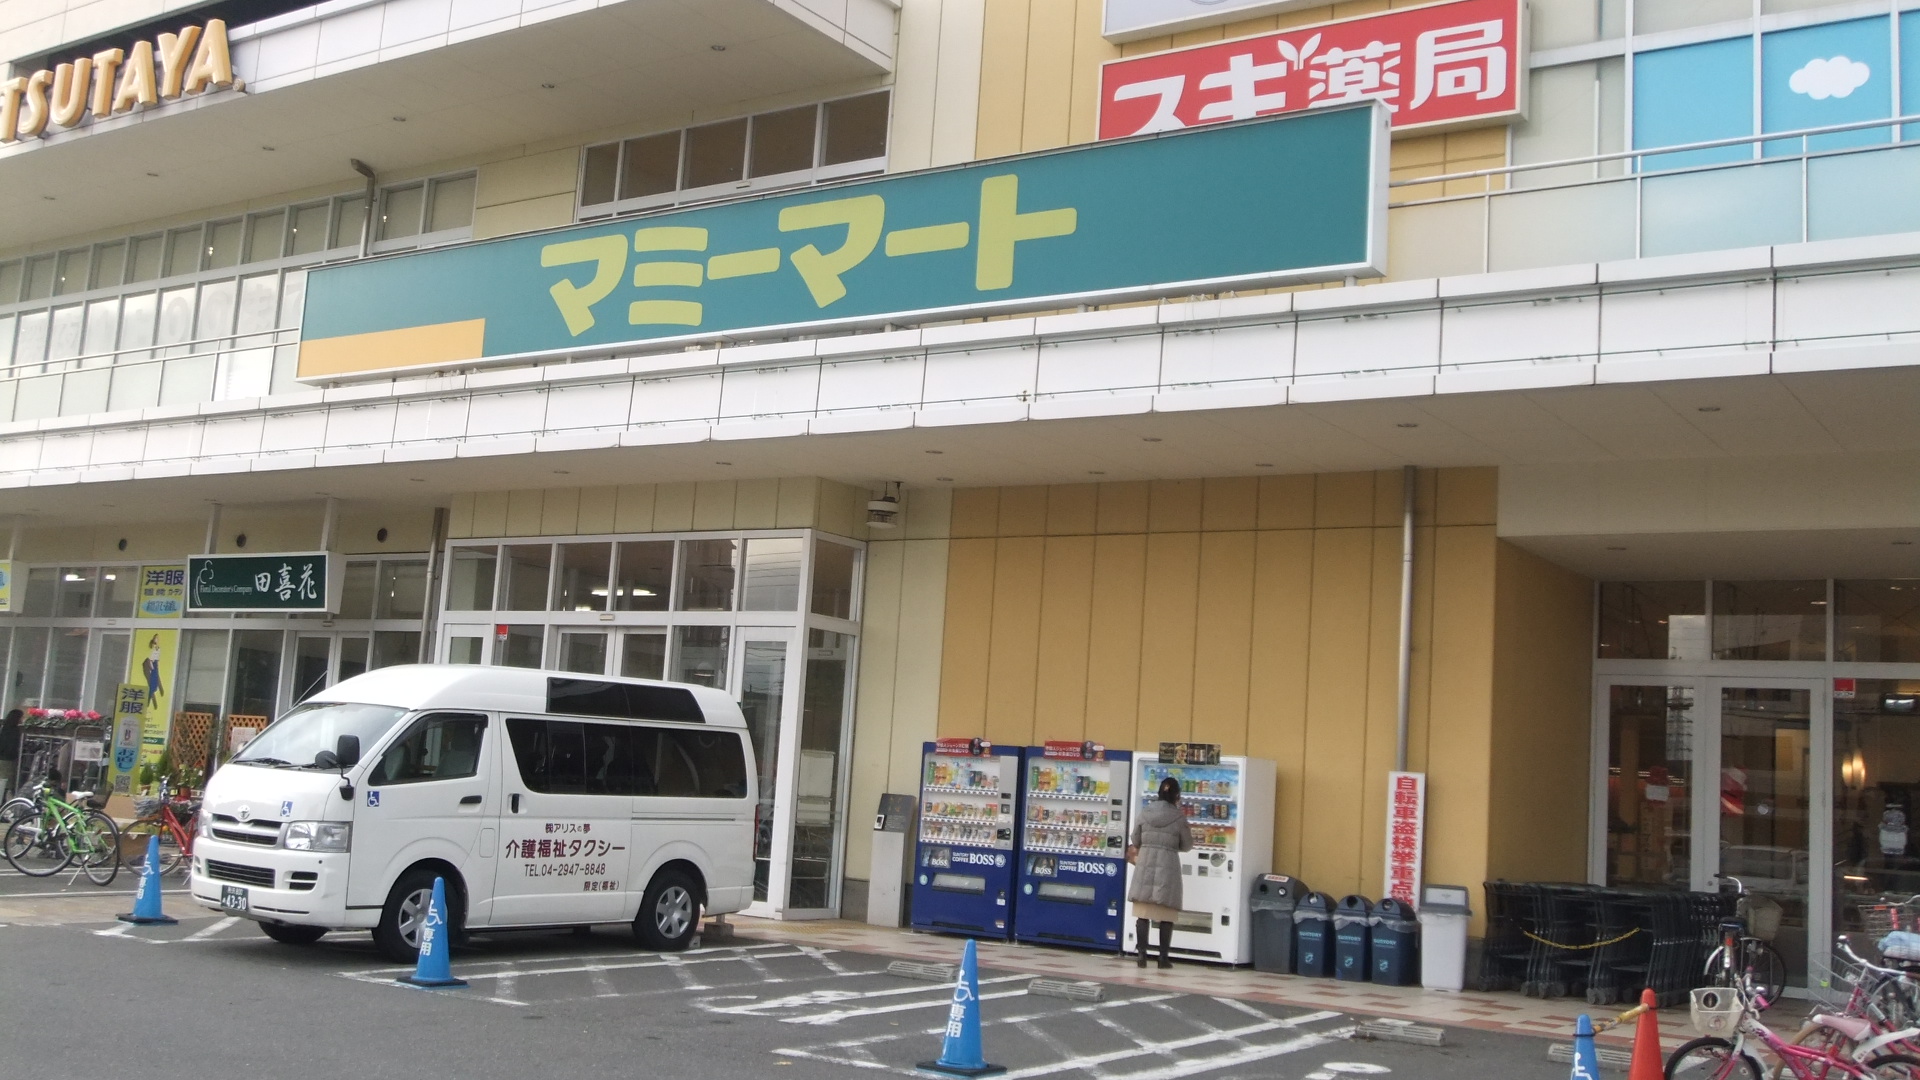 Rental video. TSUTAYA Tokorozawa Yamaguchi shop 2670m up (video rental)